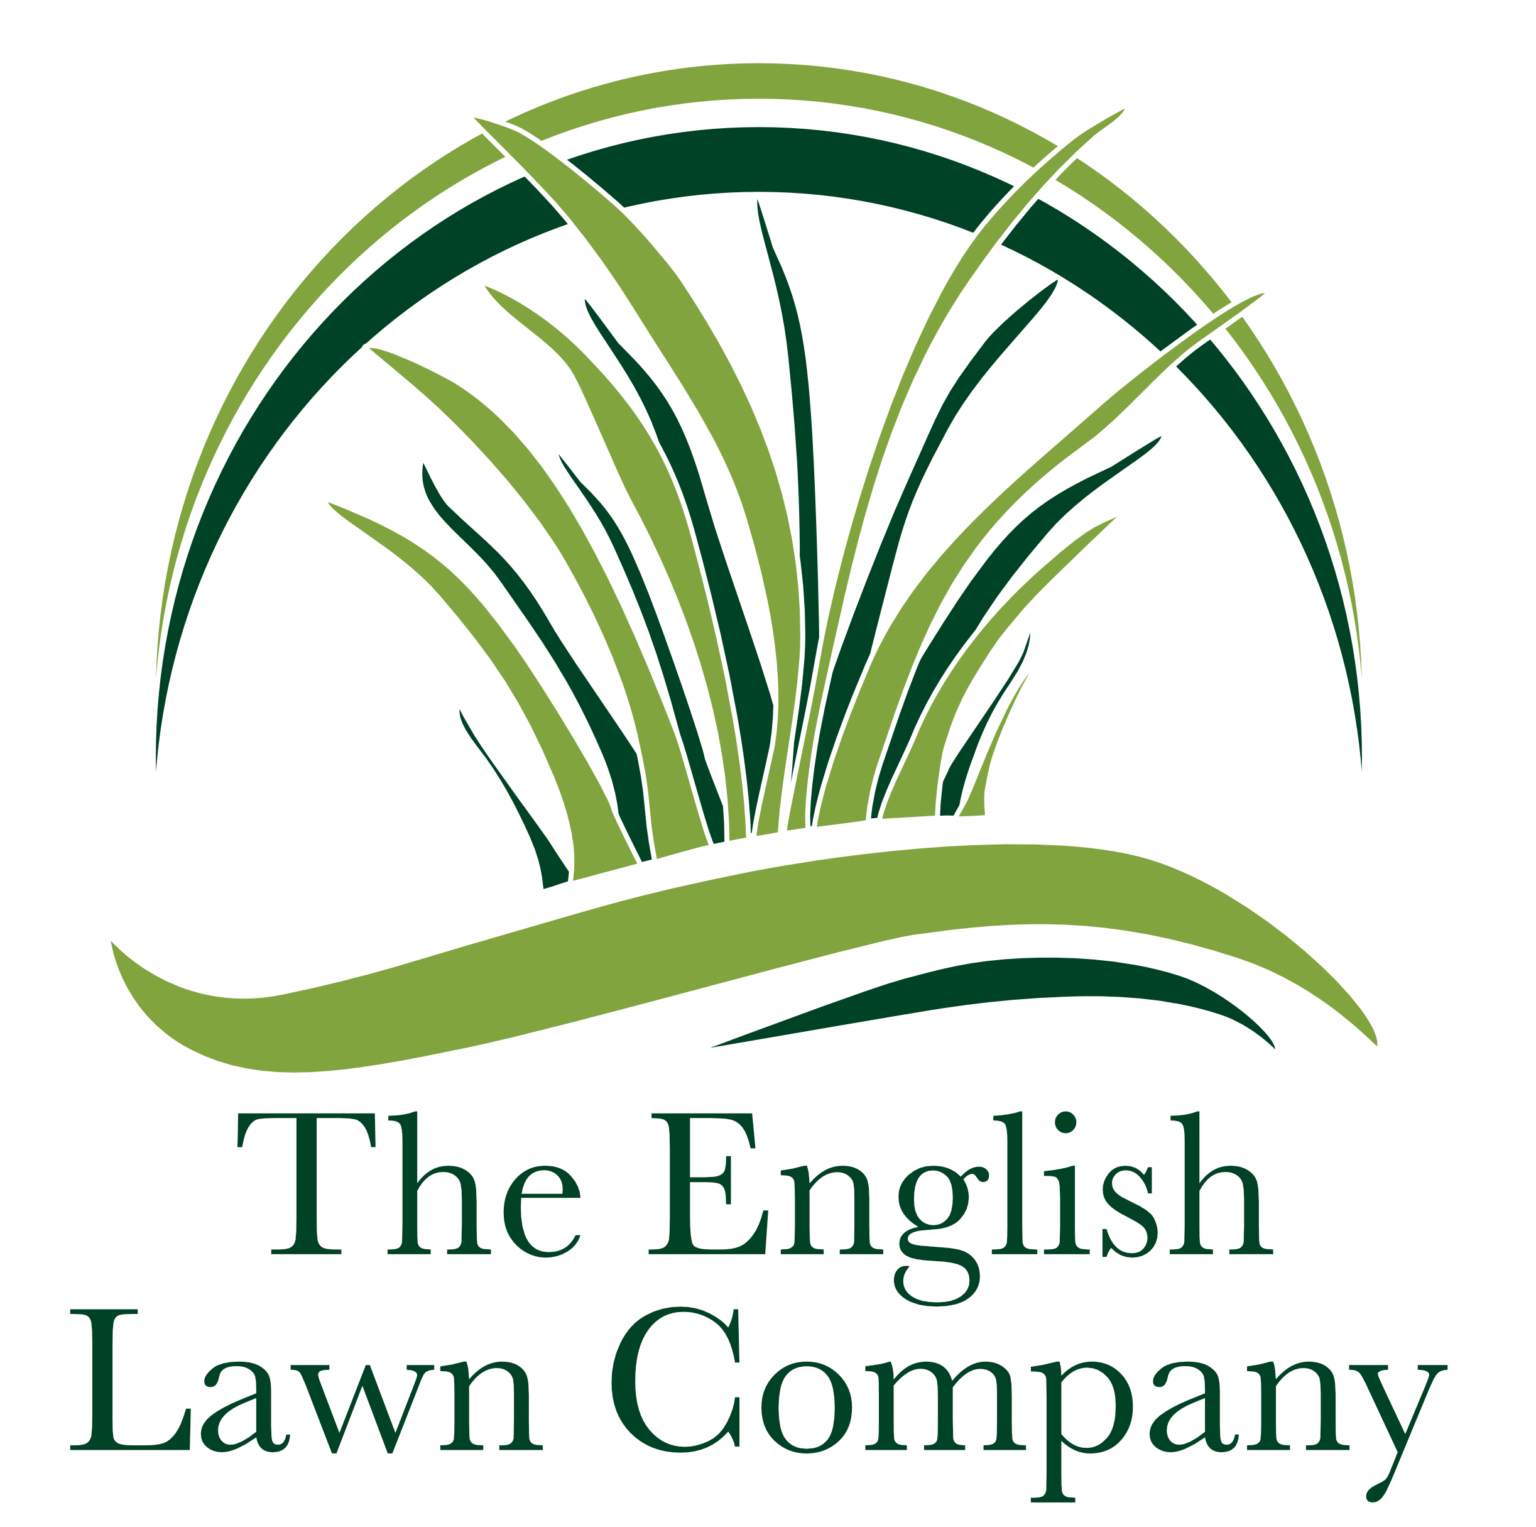 The English Lawn Company